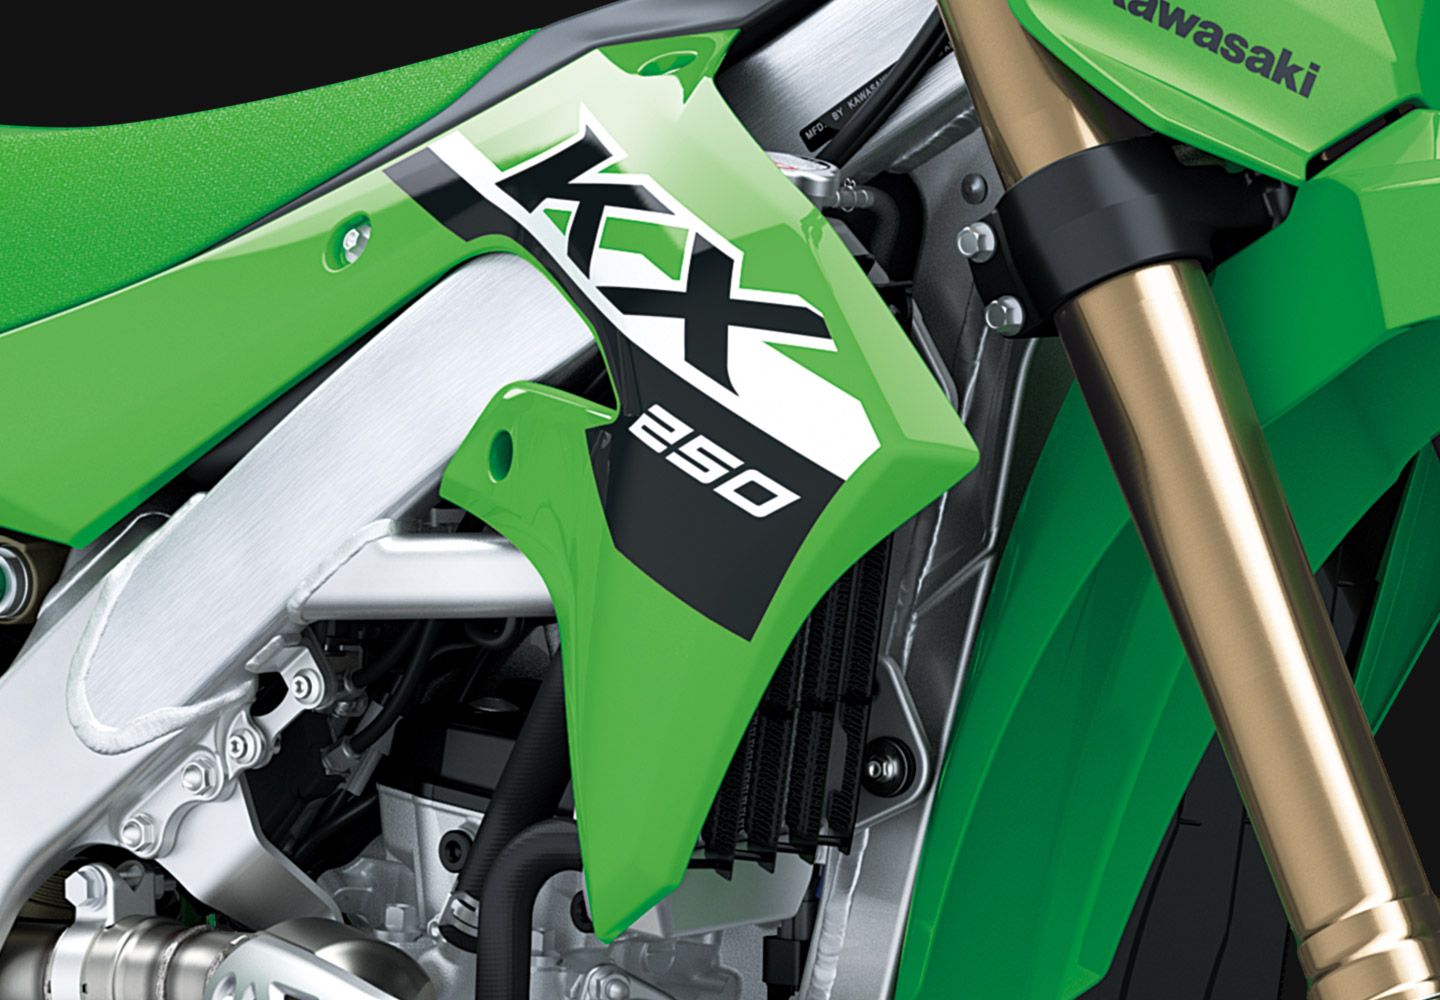 Kawasaki KX™250 | Motocross Motorcycle | High-Performance Dirtbike